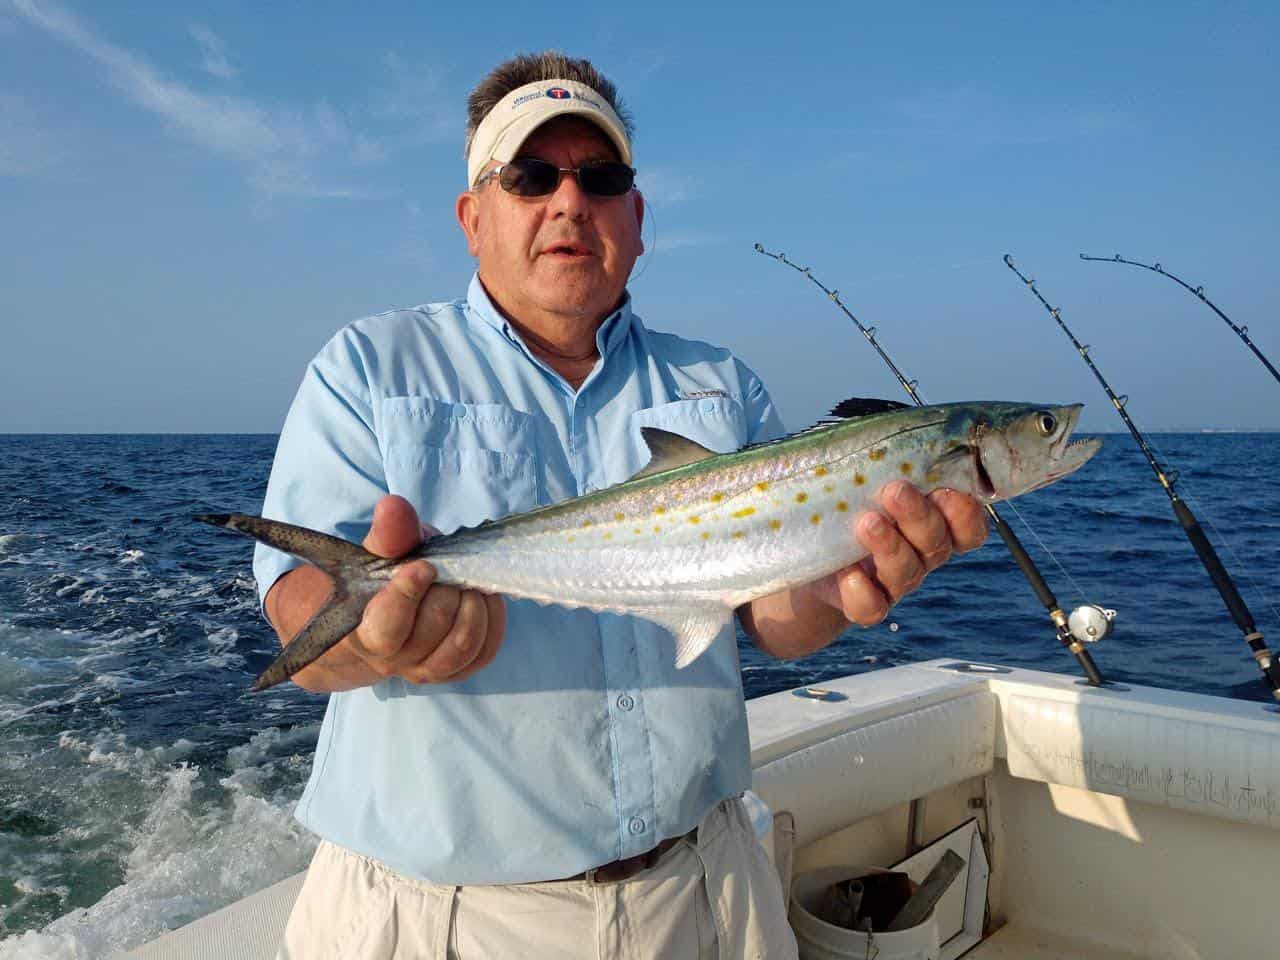  Stan Simmerman of Virginia shows off a nice Spanish mackerel. (Photo courtesy of Ken Neill) 